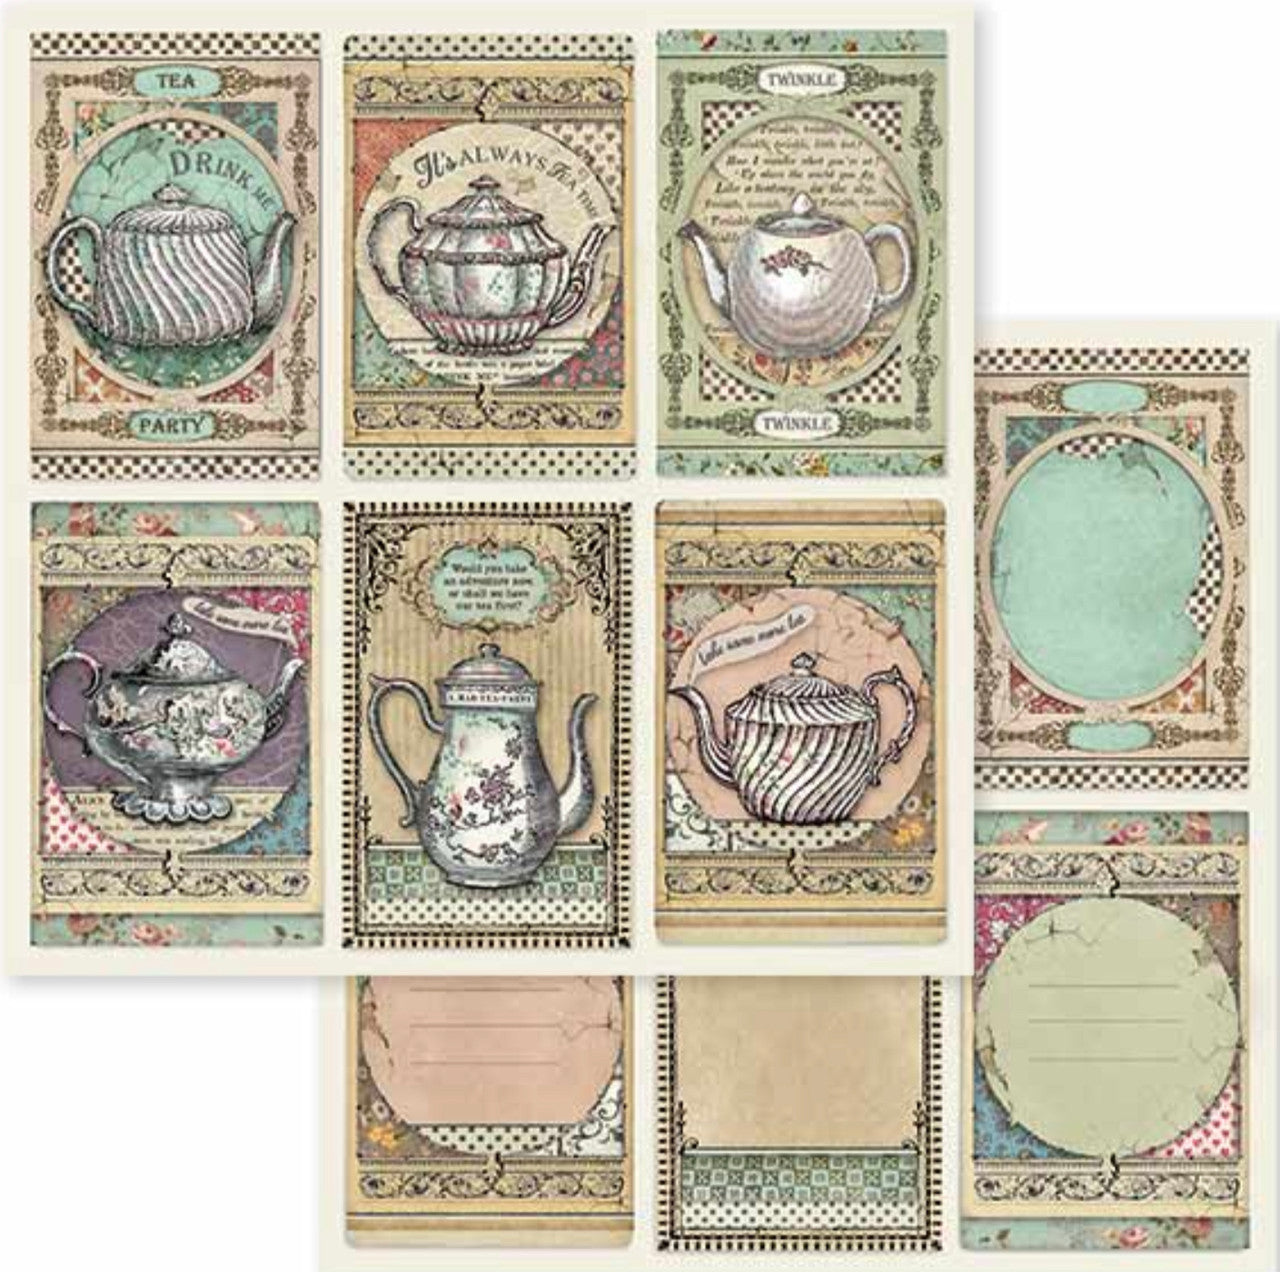 Stamperia Alice in Wonderland Paper Pack 12” x 12”